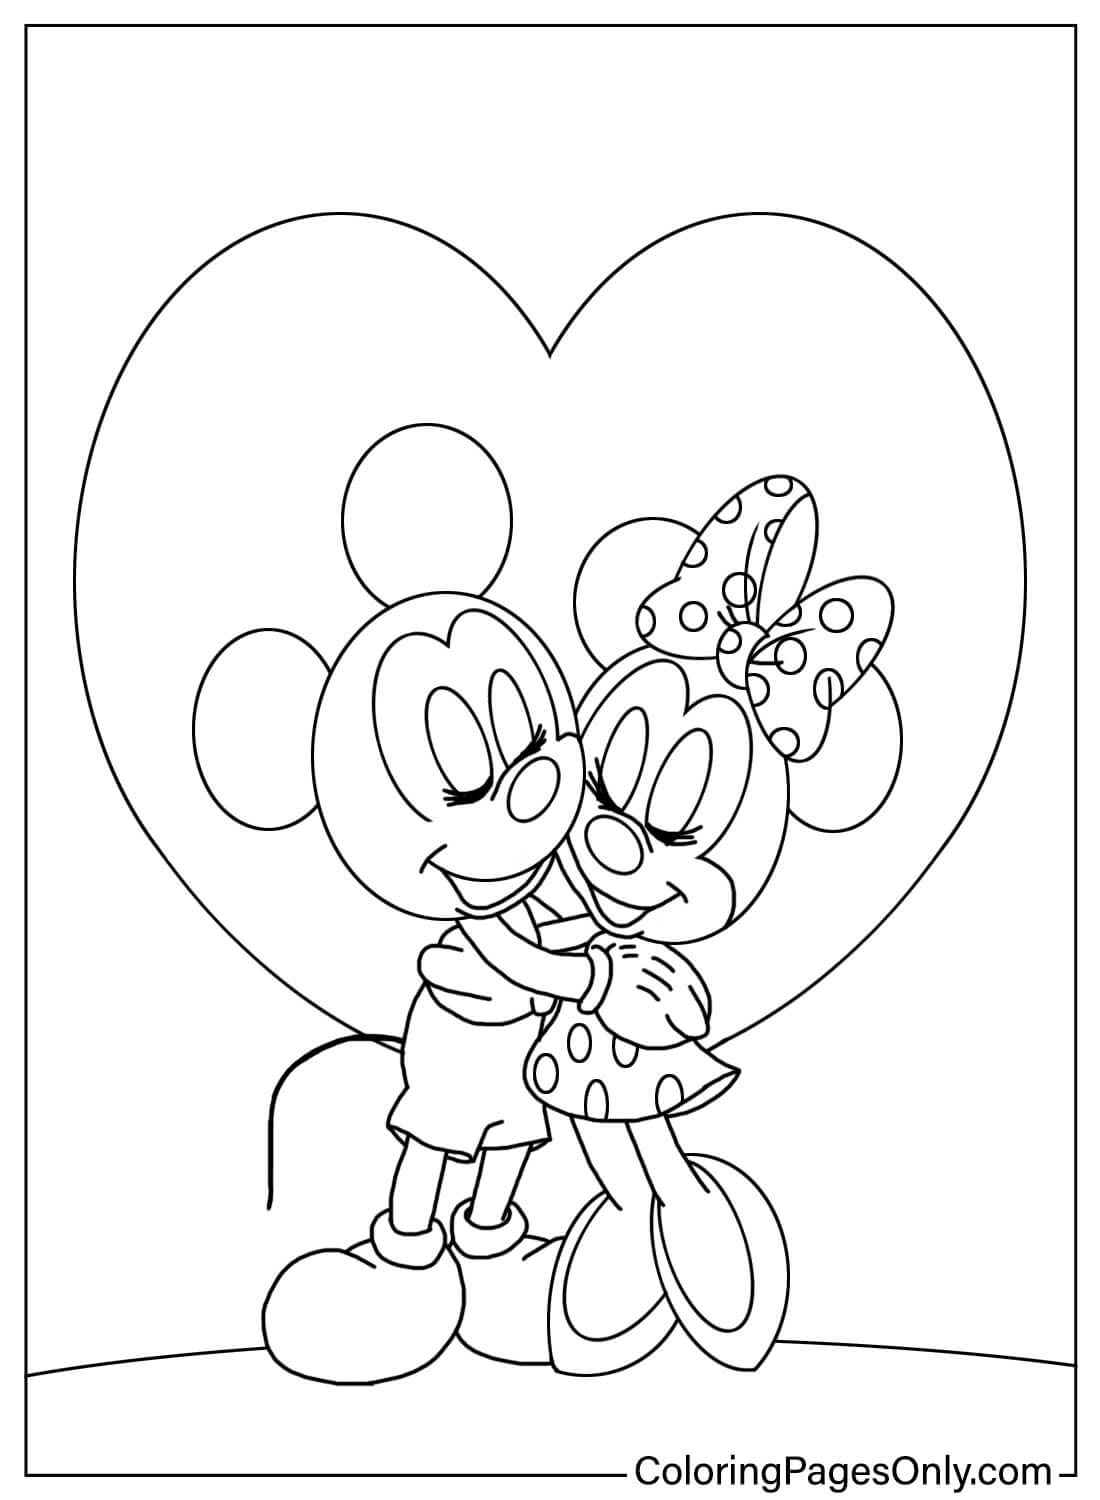 Coloriage Mickey et Minnie de Mickey Mouse